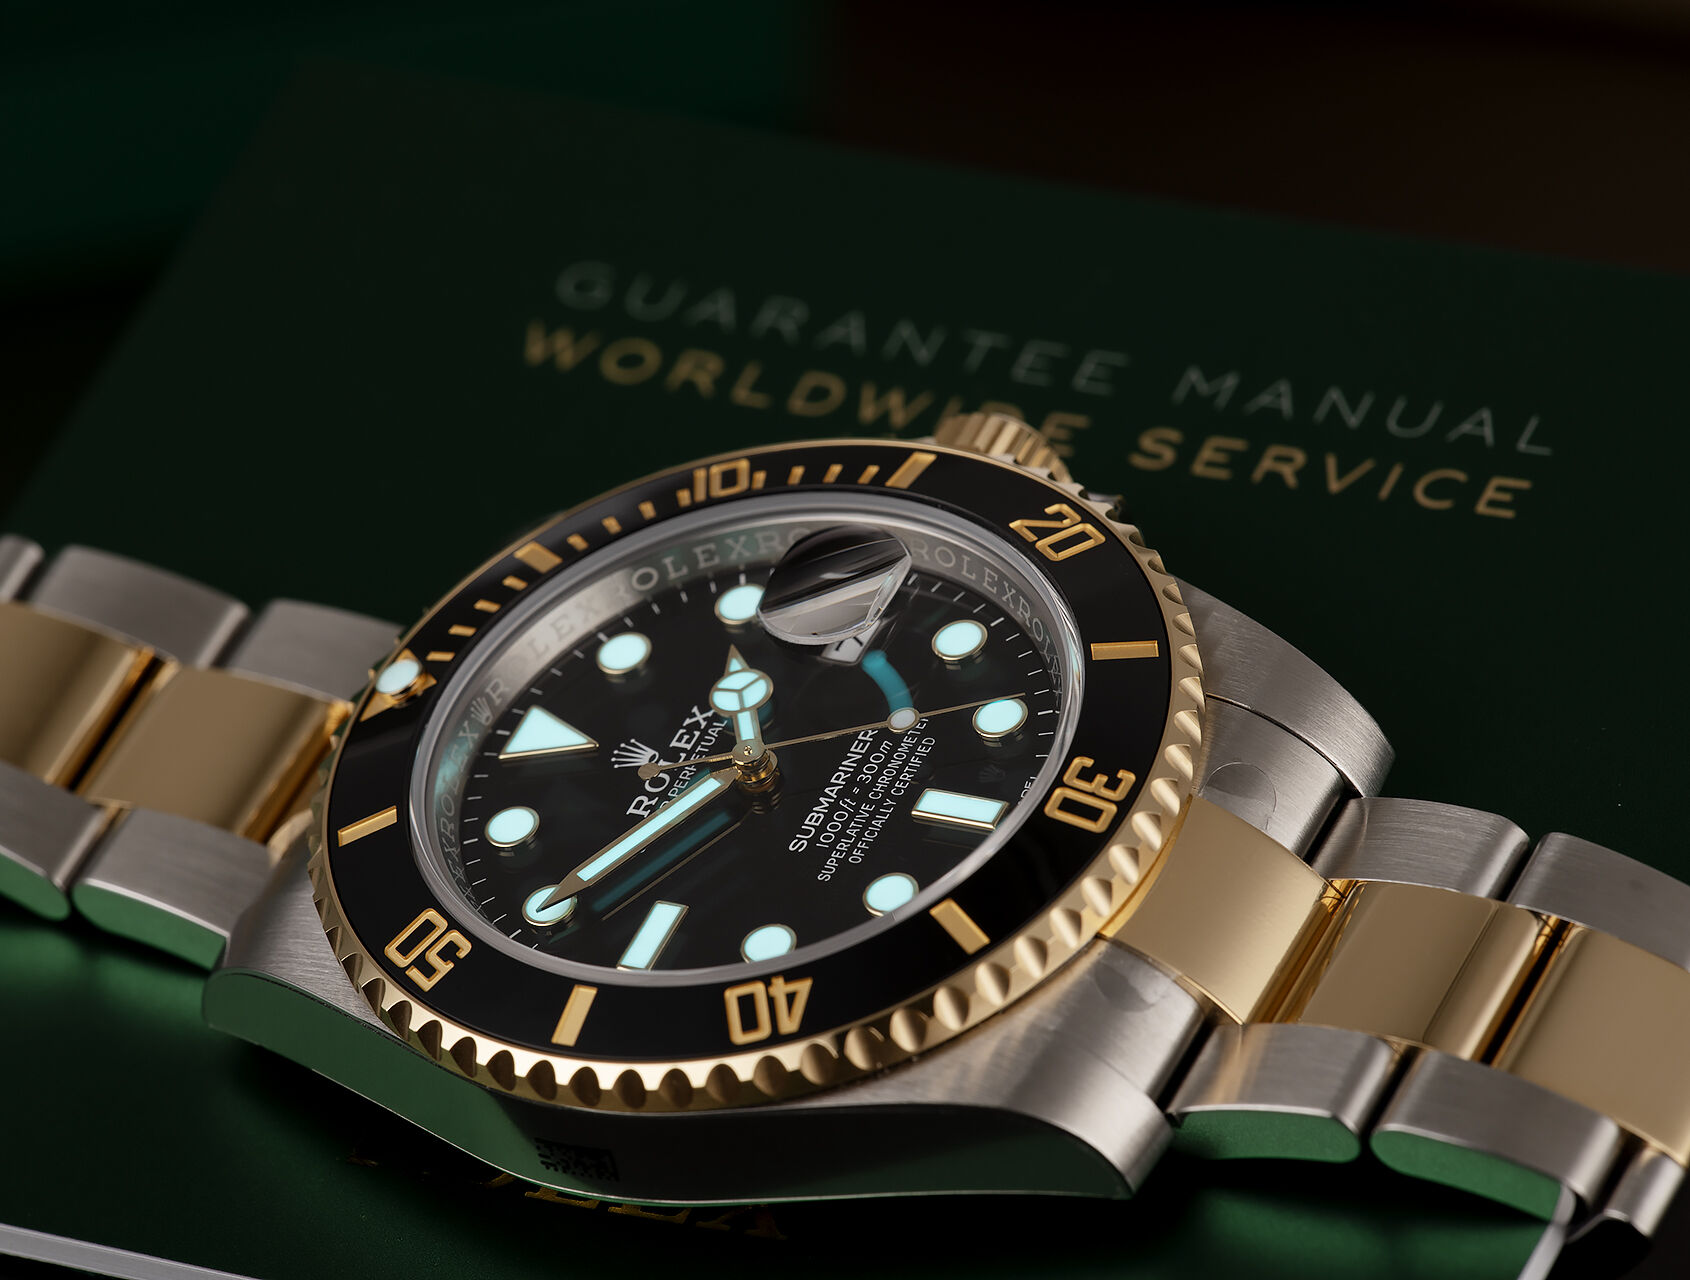 ref 116613LN | UK Retailed | Rolex Submariner Date